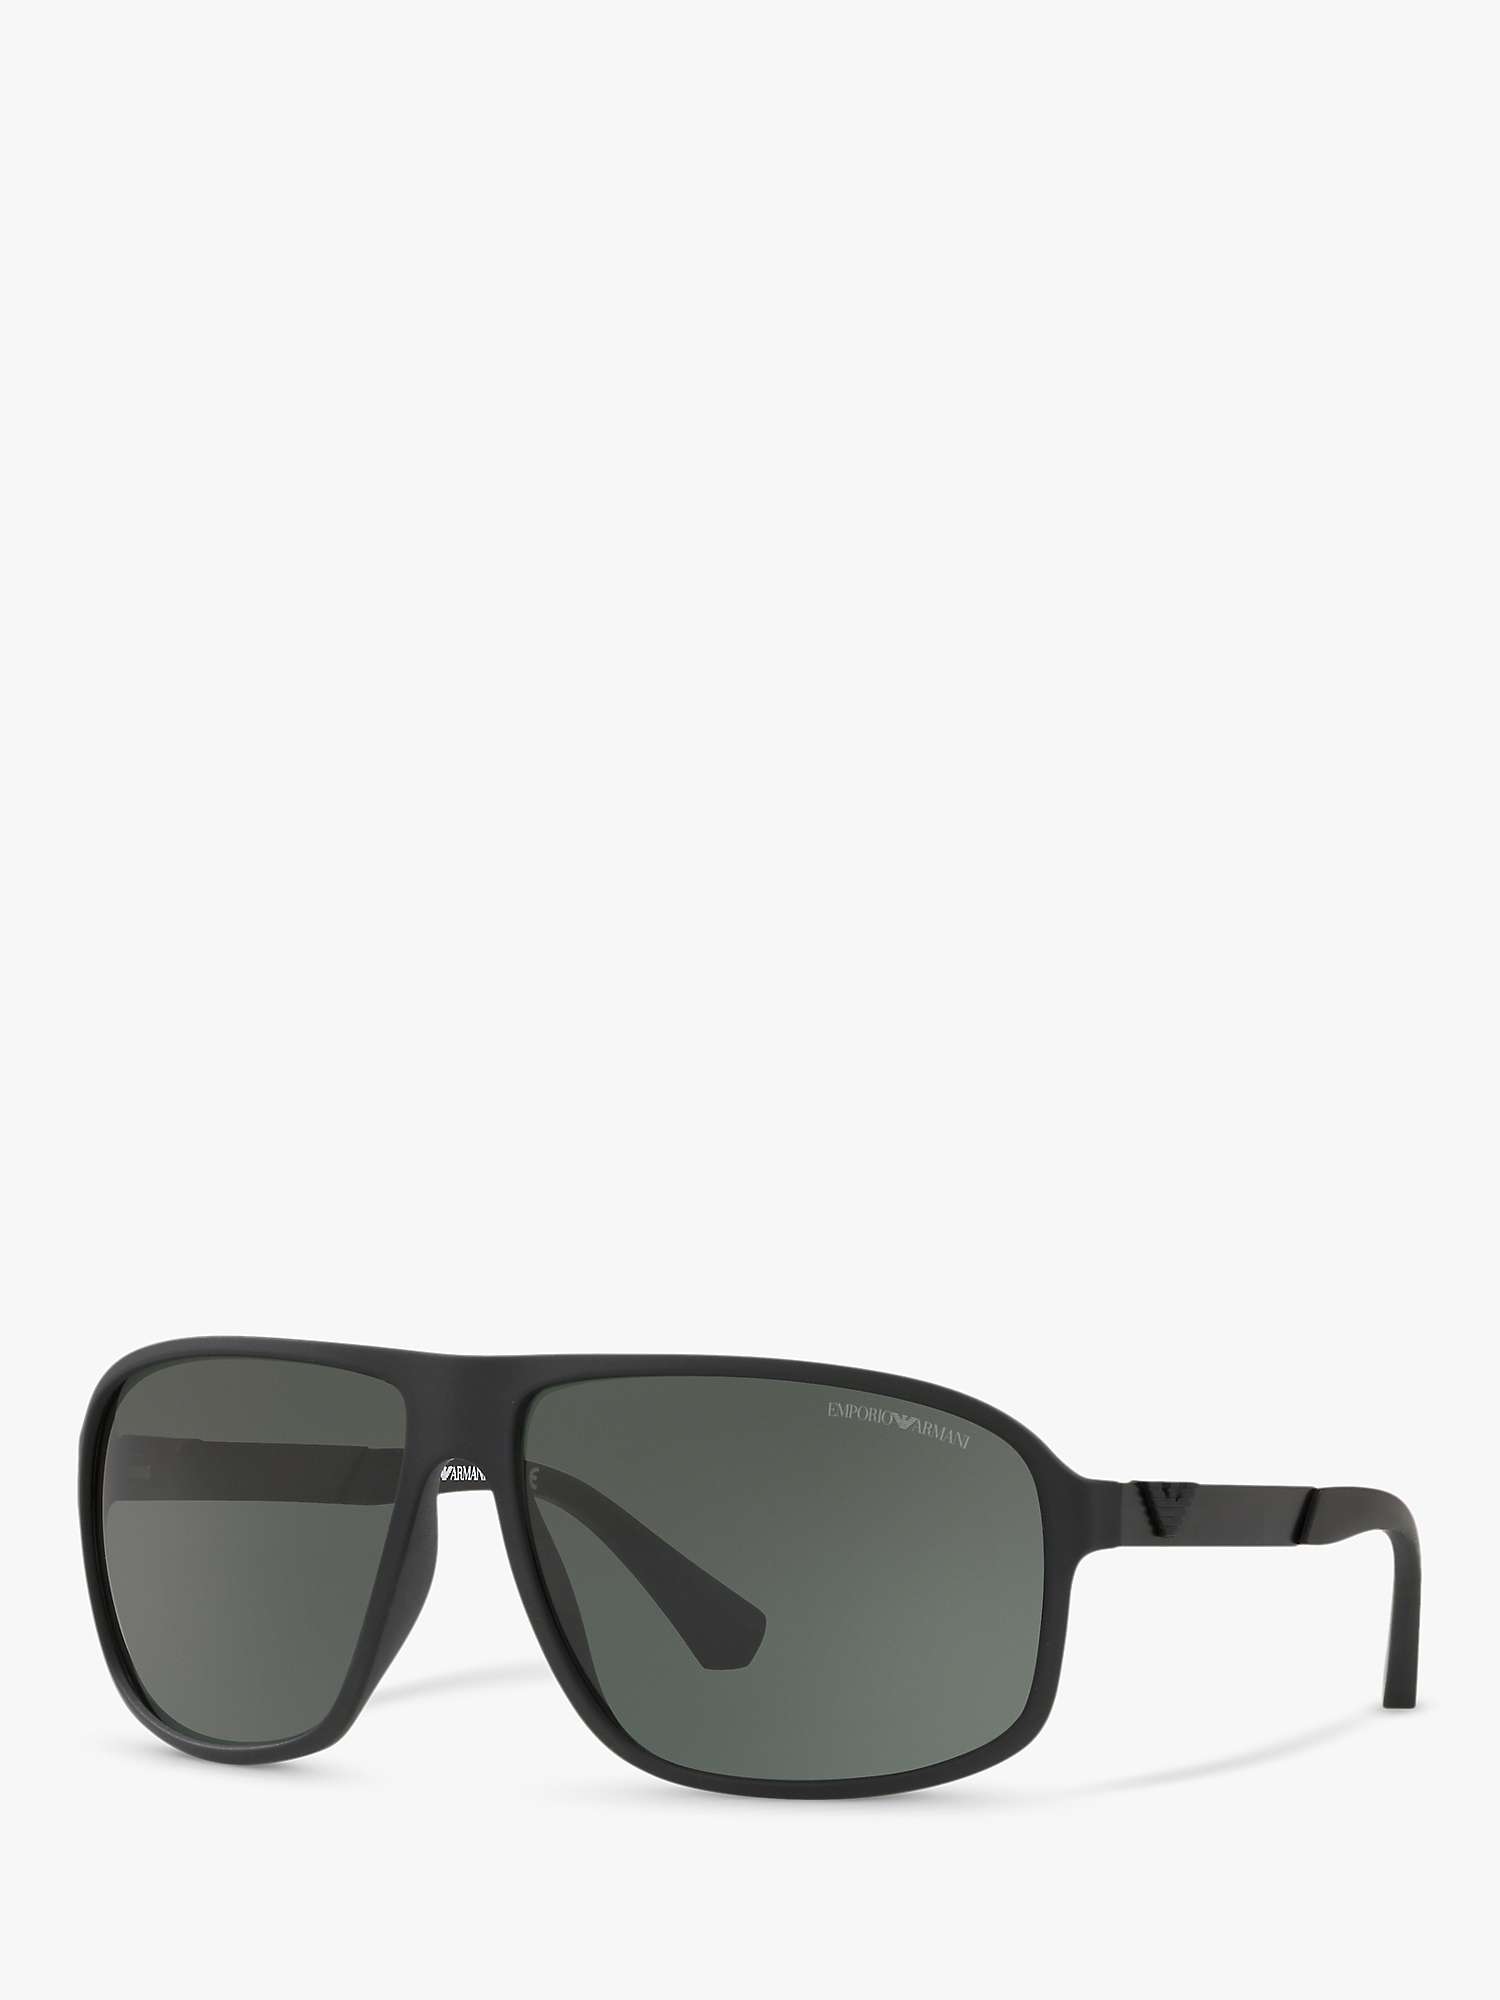 Emporio Armani EA4029 Men's Square Sunglasses, Black/Grey at John Lewis ...